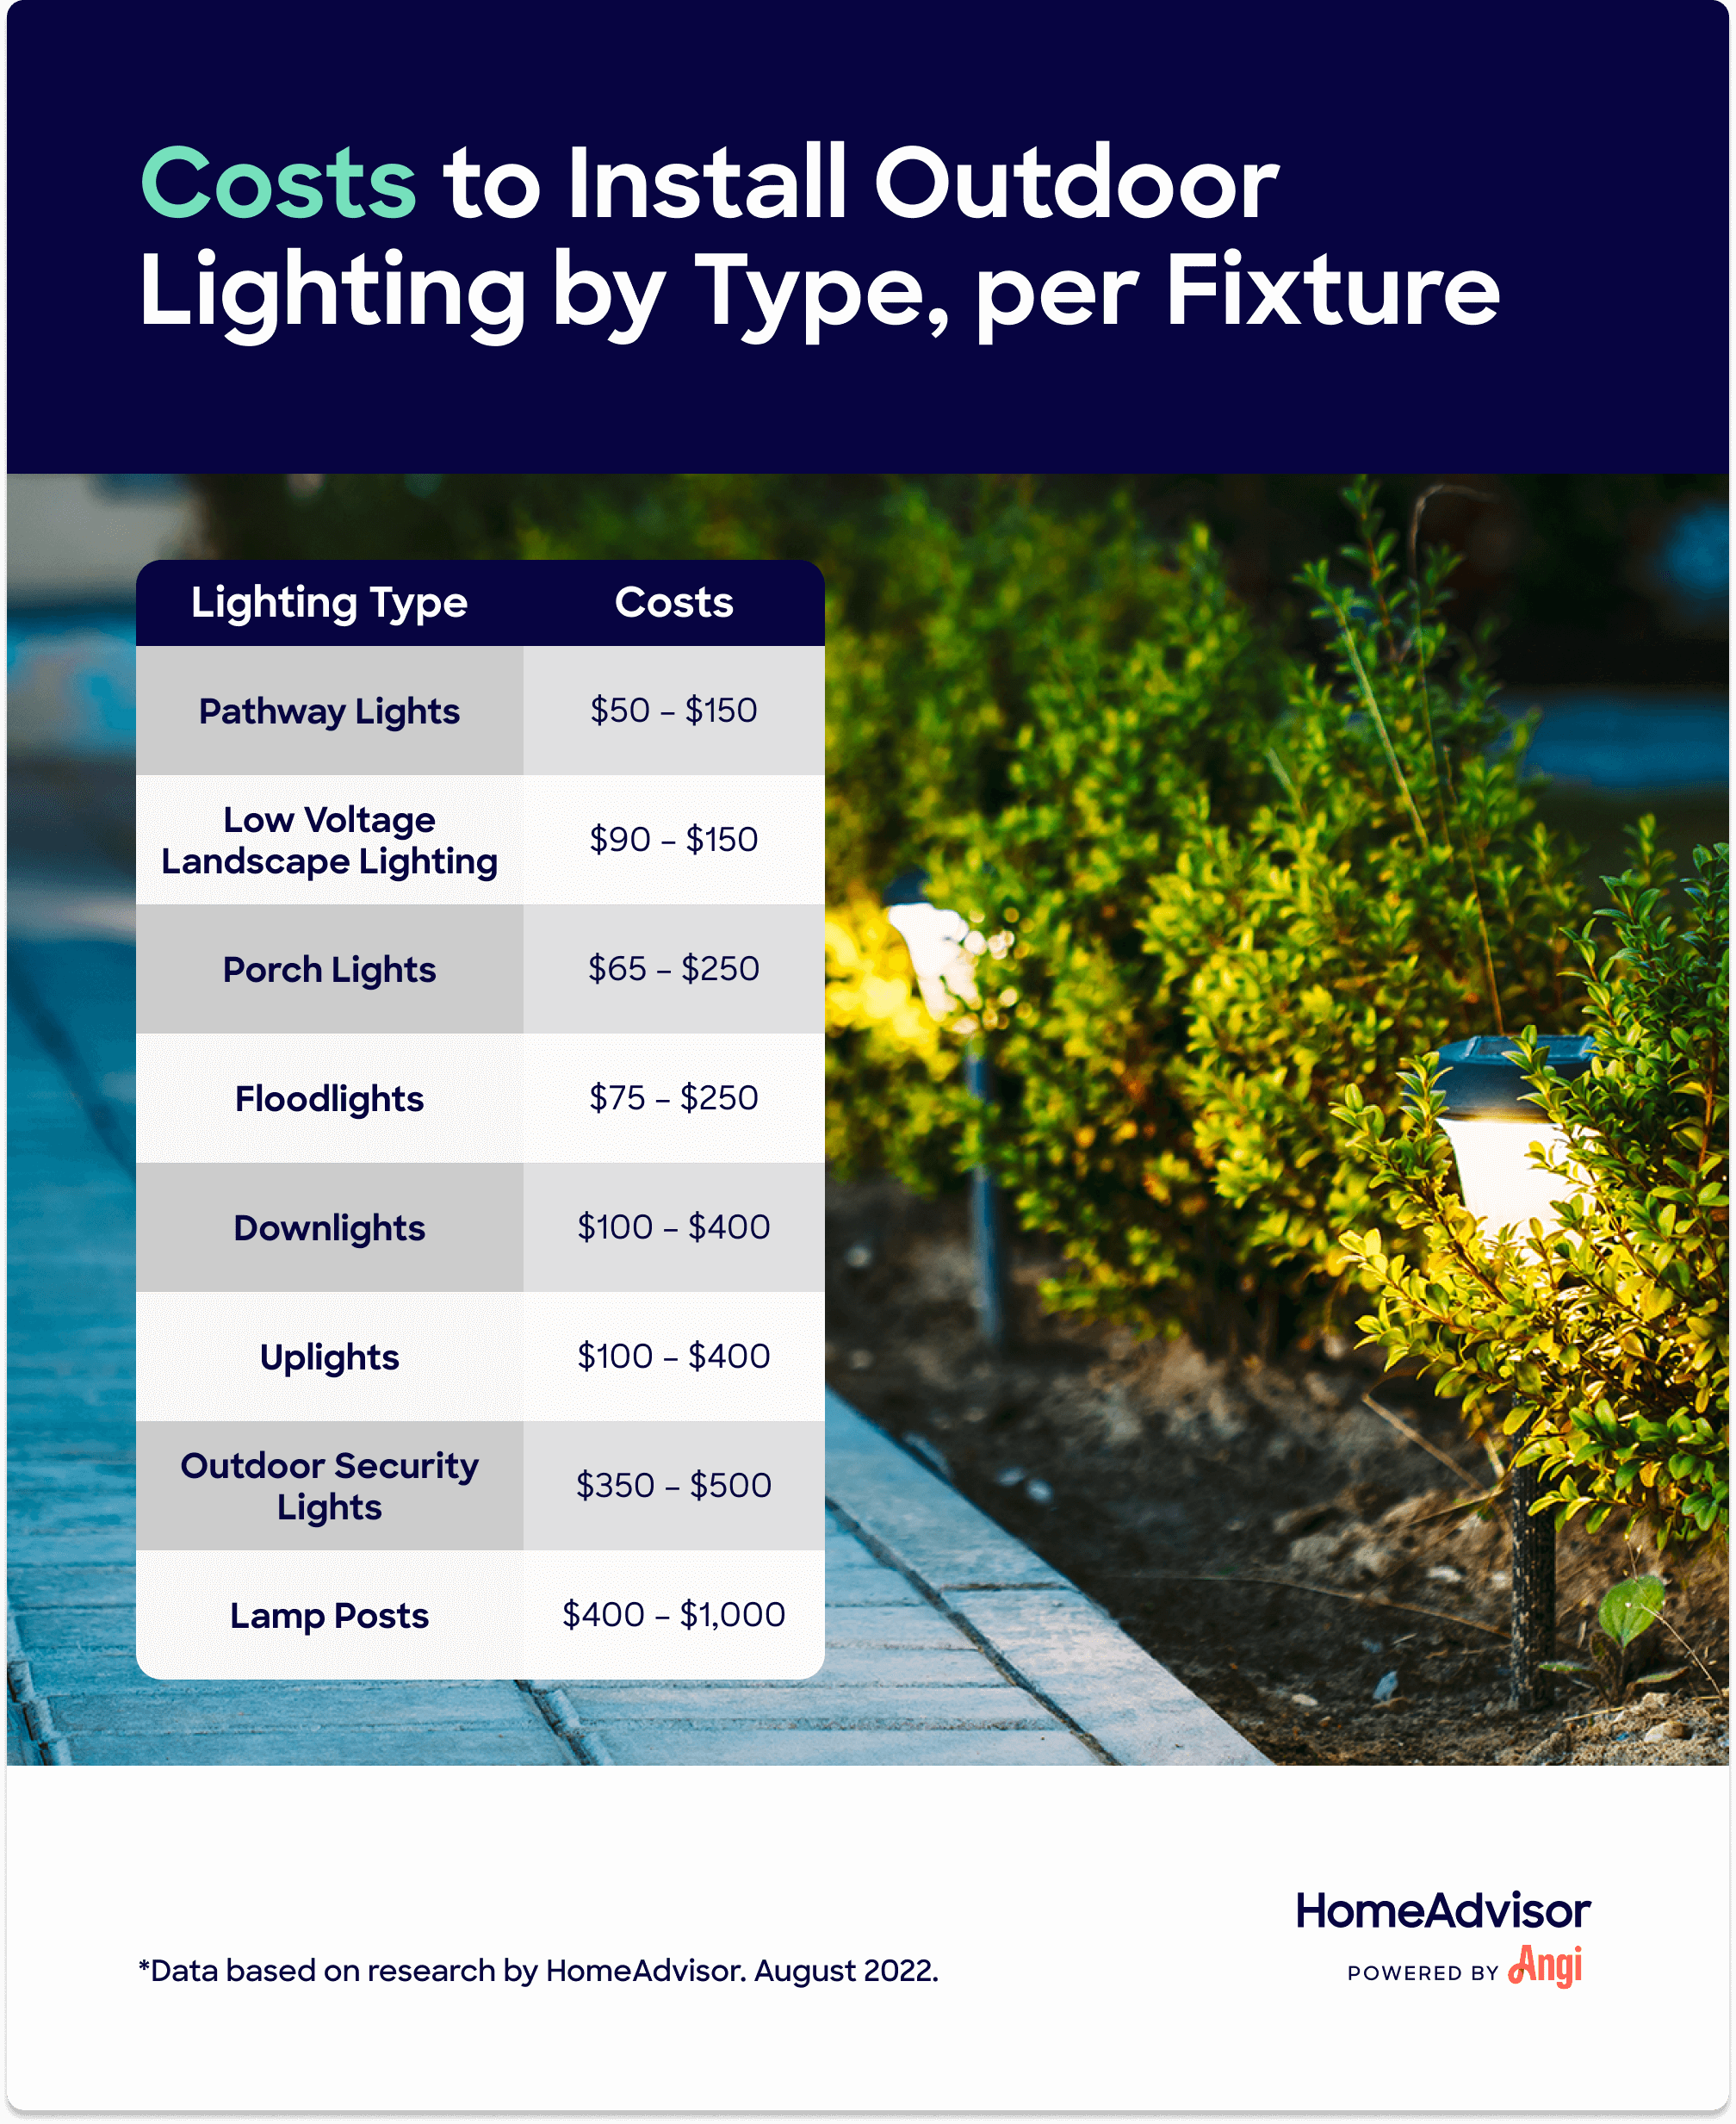 Cost of Low-Voltage Lighting